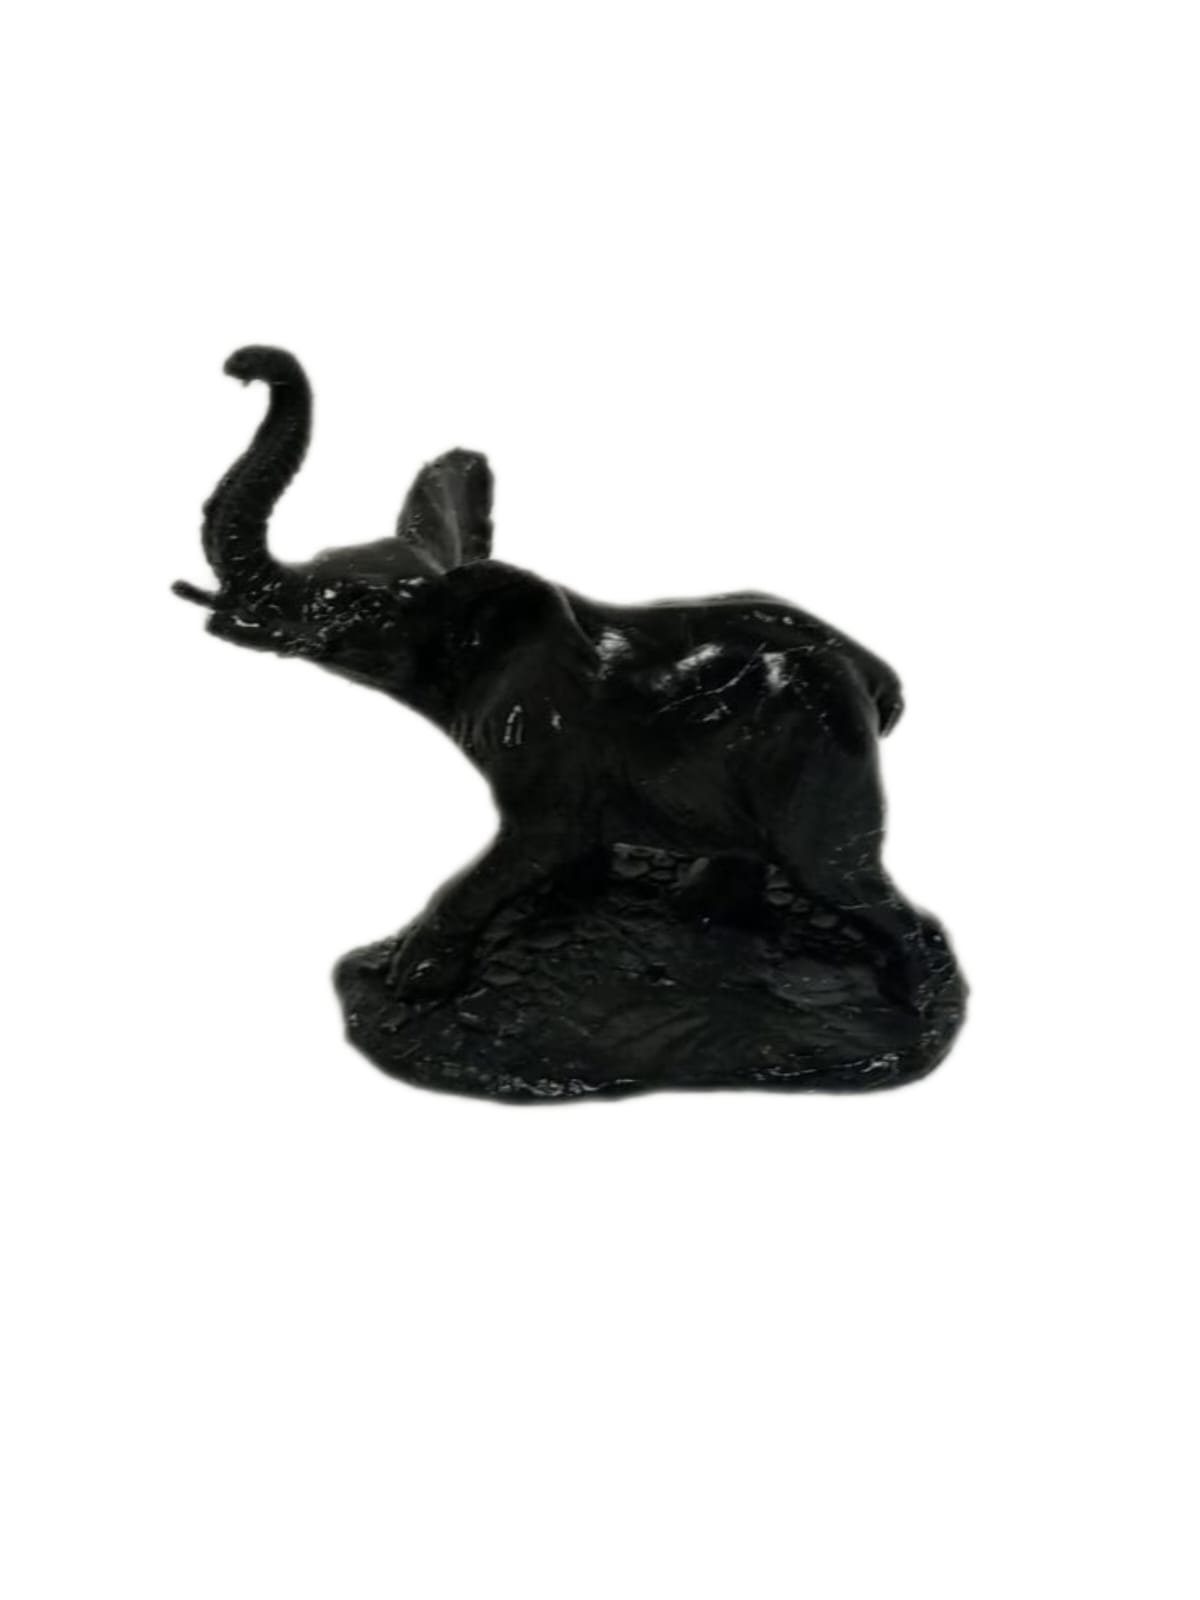 Dekofigur Elefant aus Polyresin Skulptur Dekofigur Schwarz Marmoroptik, moebel17 2er Set